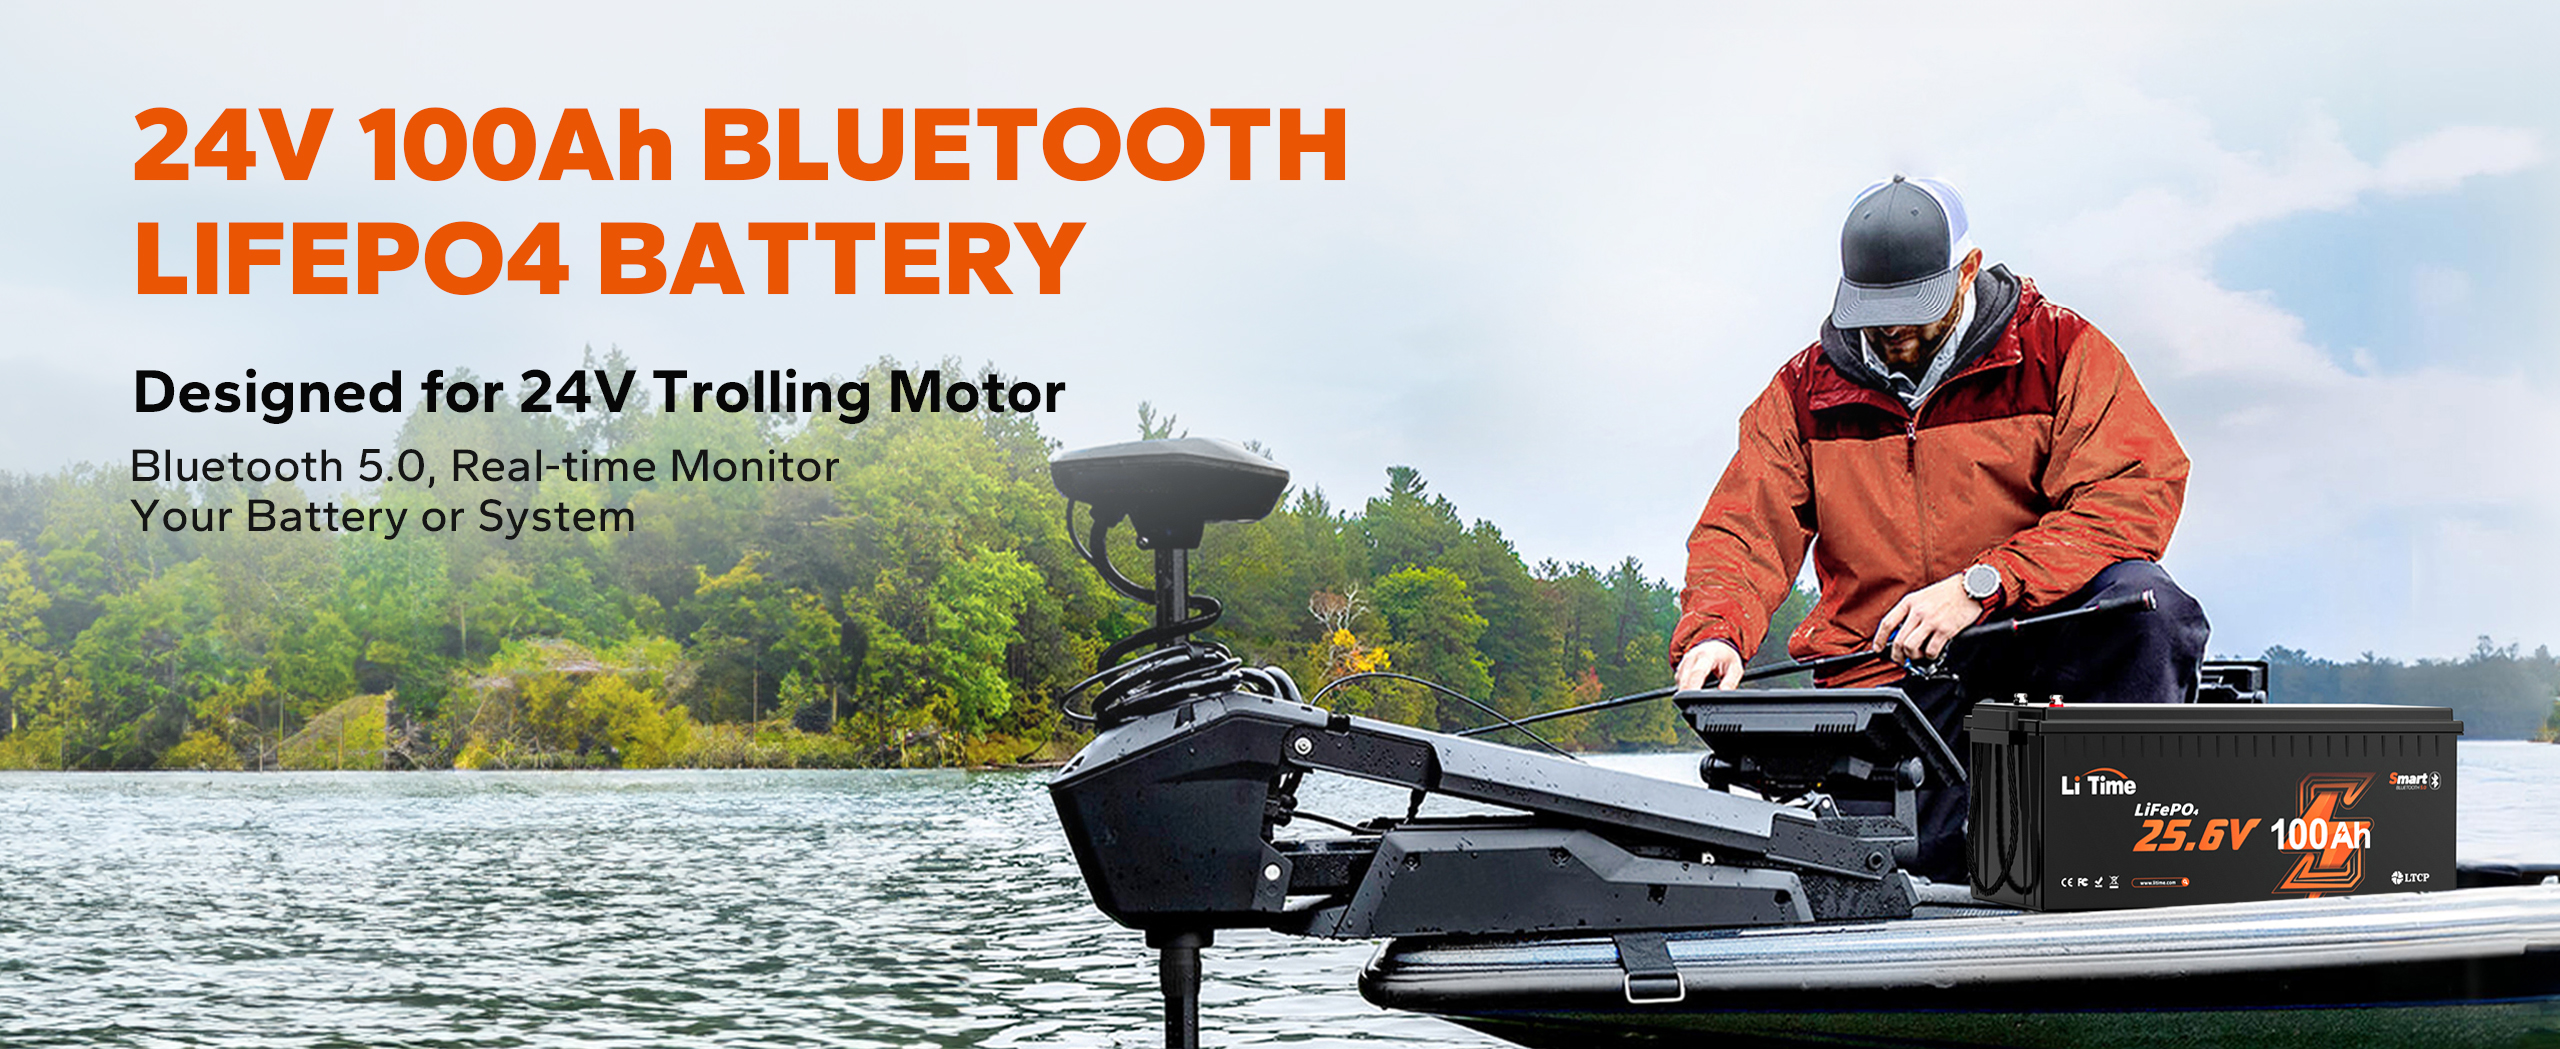 24V 100Ah bluetooth battery designed for trolling motor